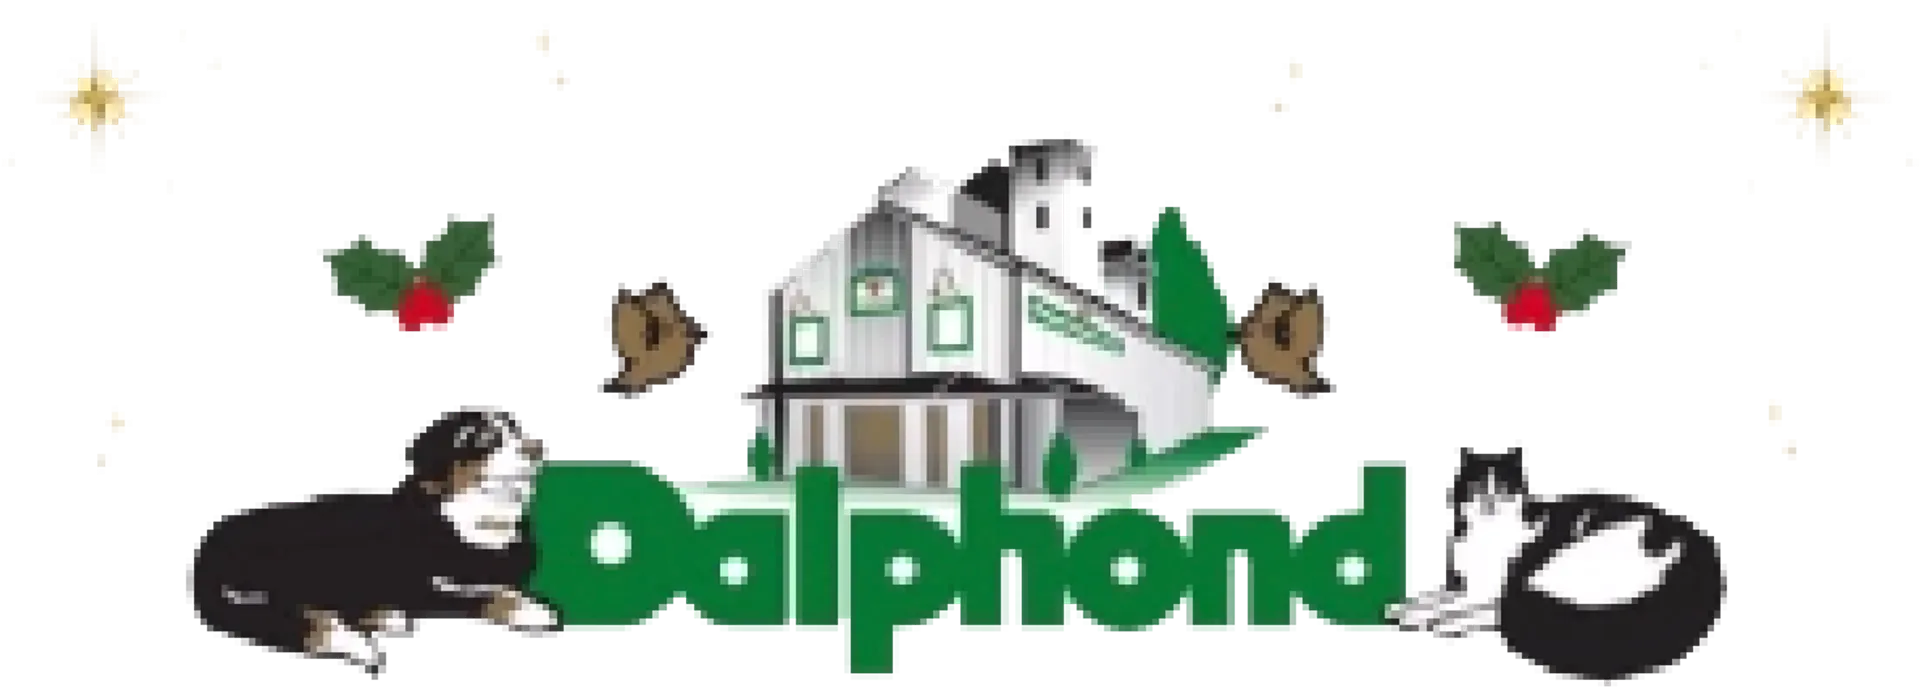 DALPHOND logo de circulaire